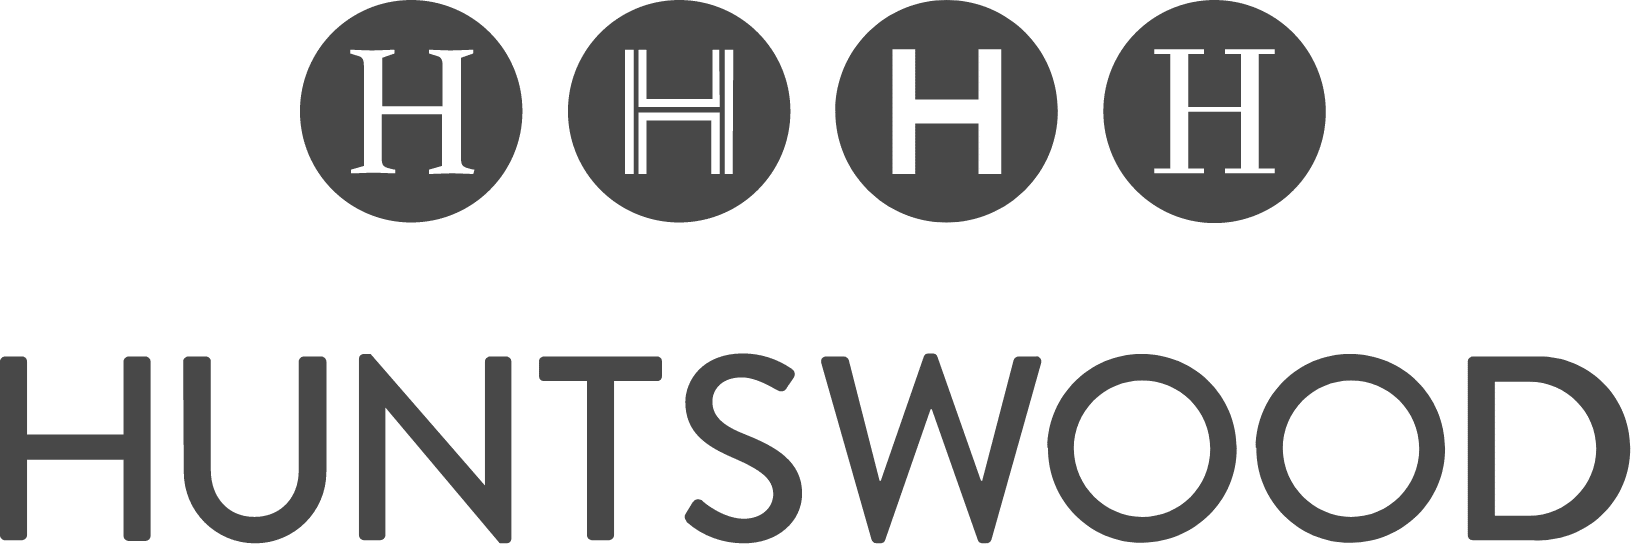 huntswood-logo